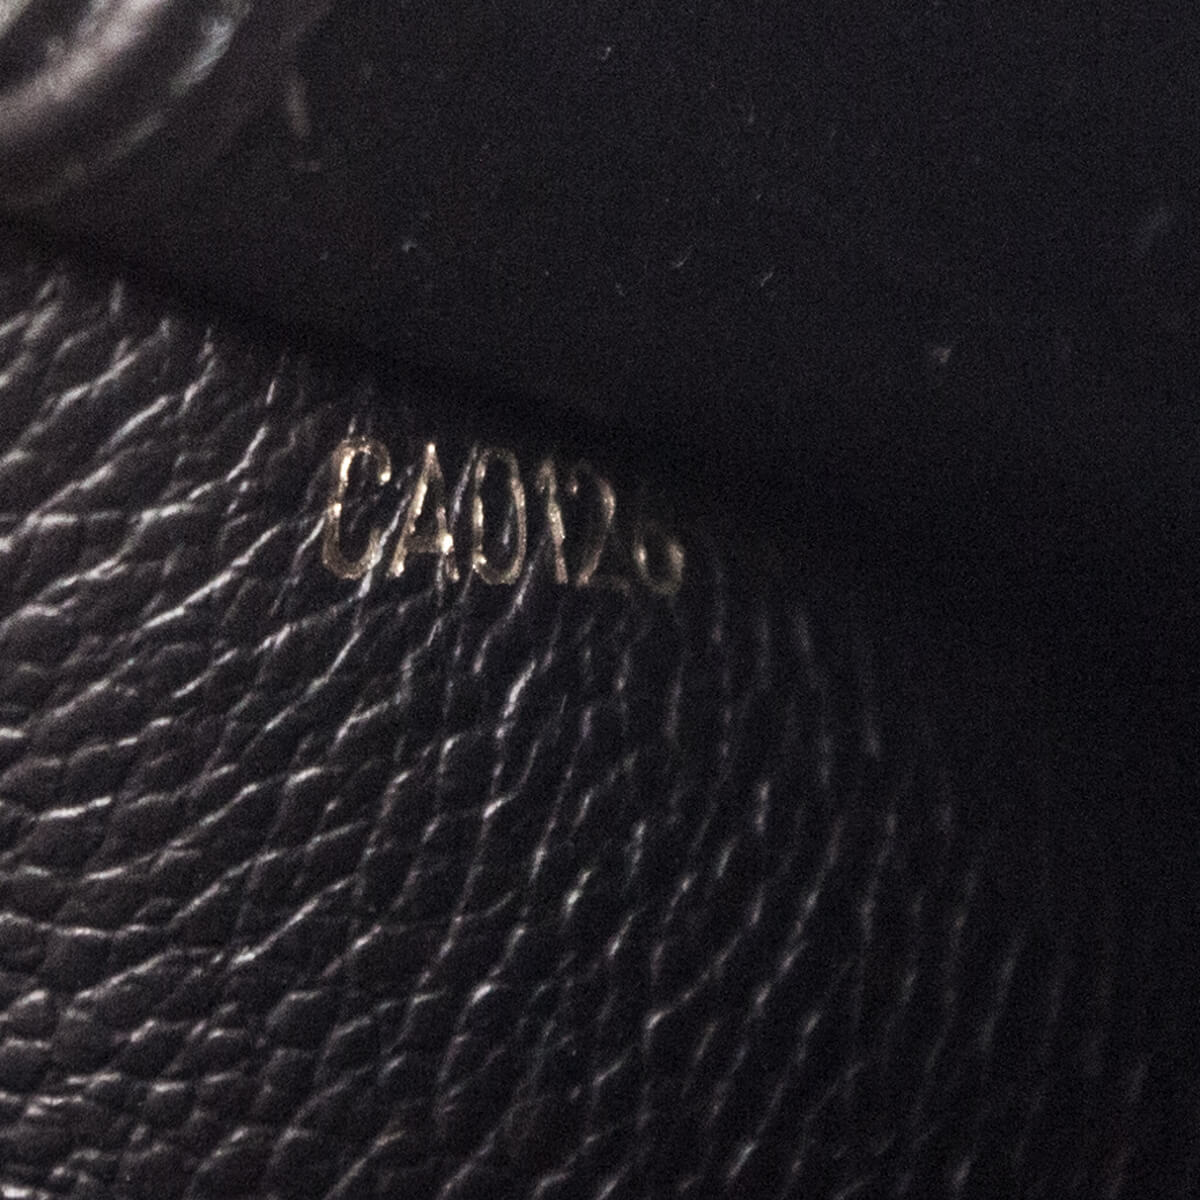 Louis Vuitton Sarah Wallet NM Monogram Empreinte Leather Pink 229910186